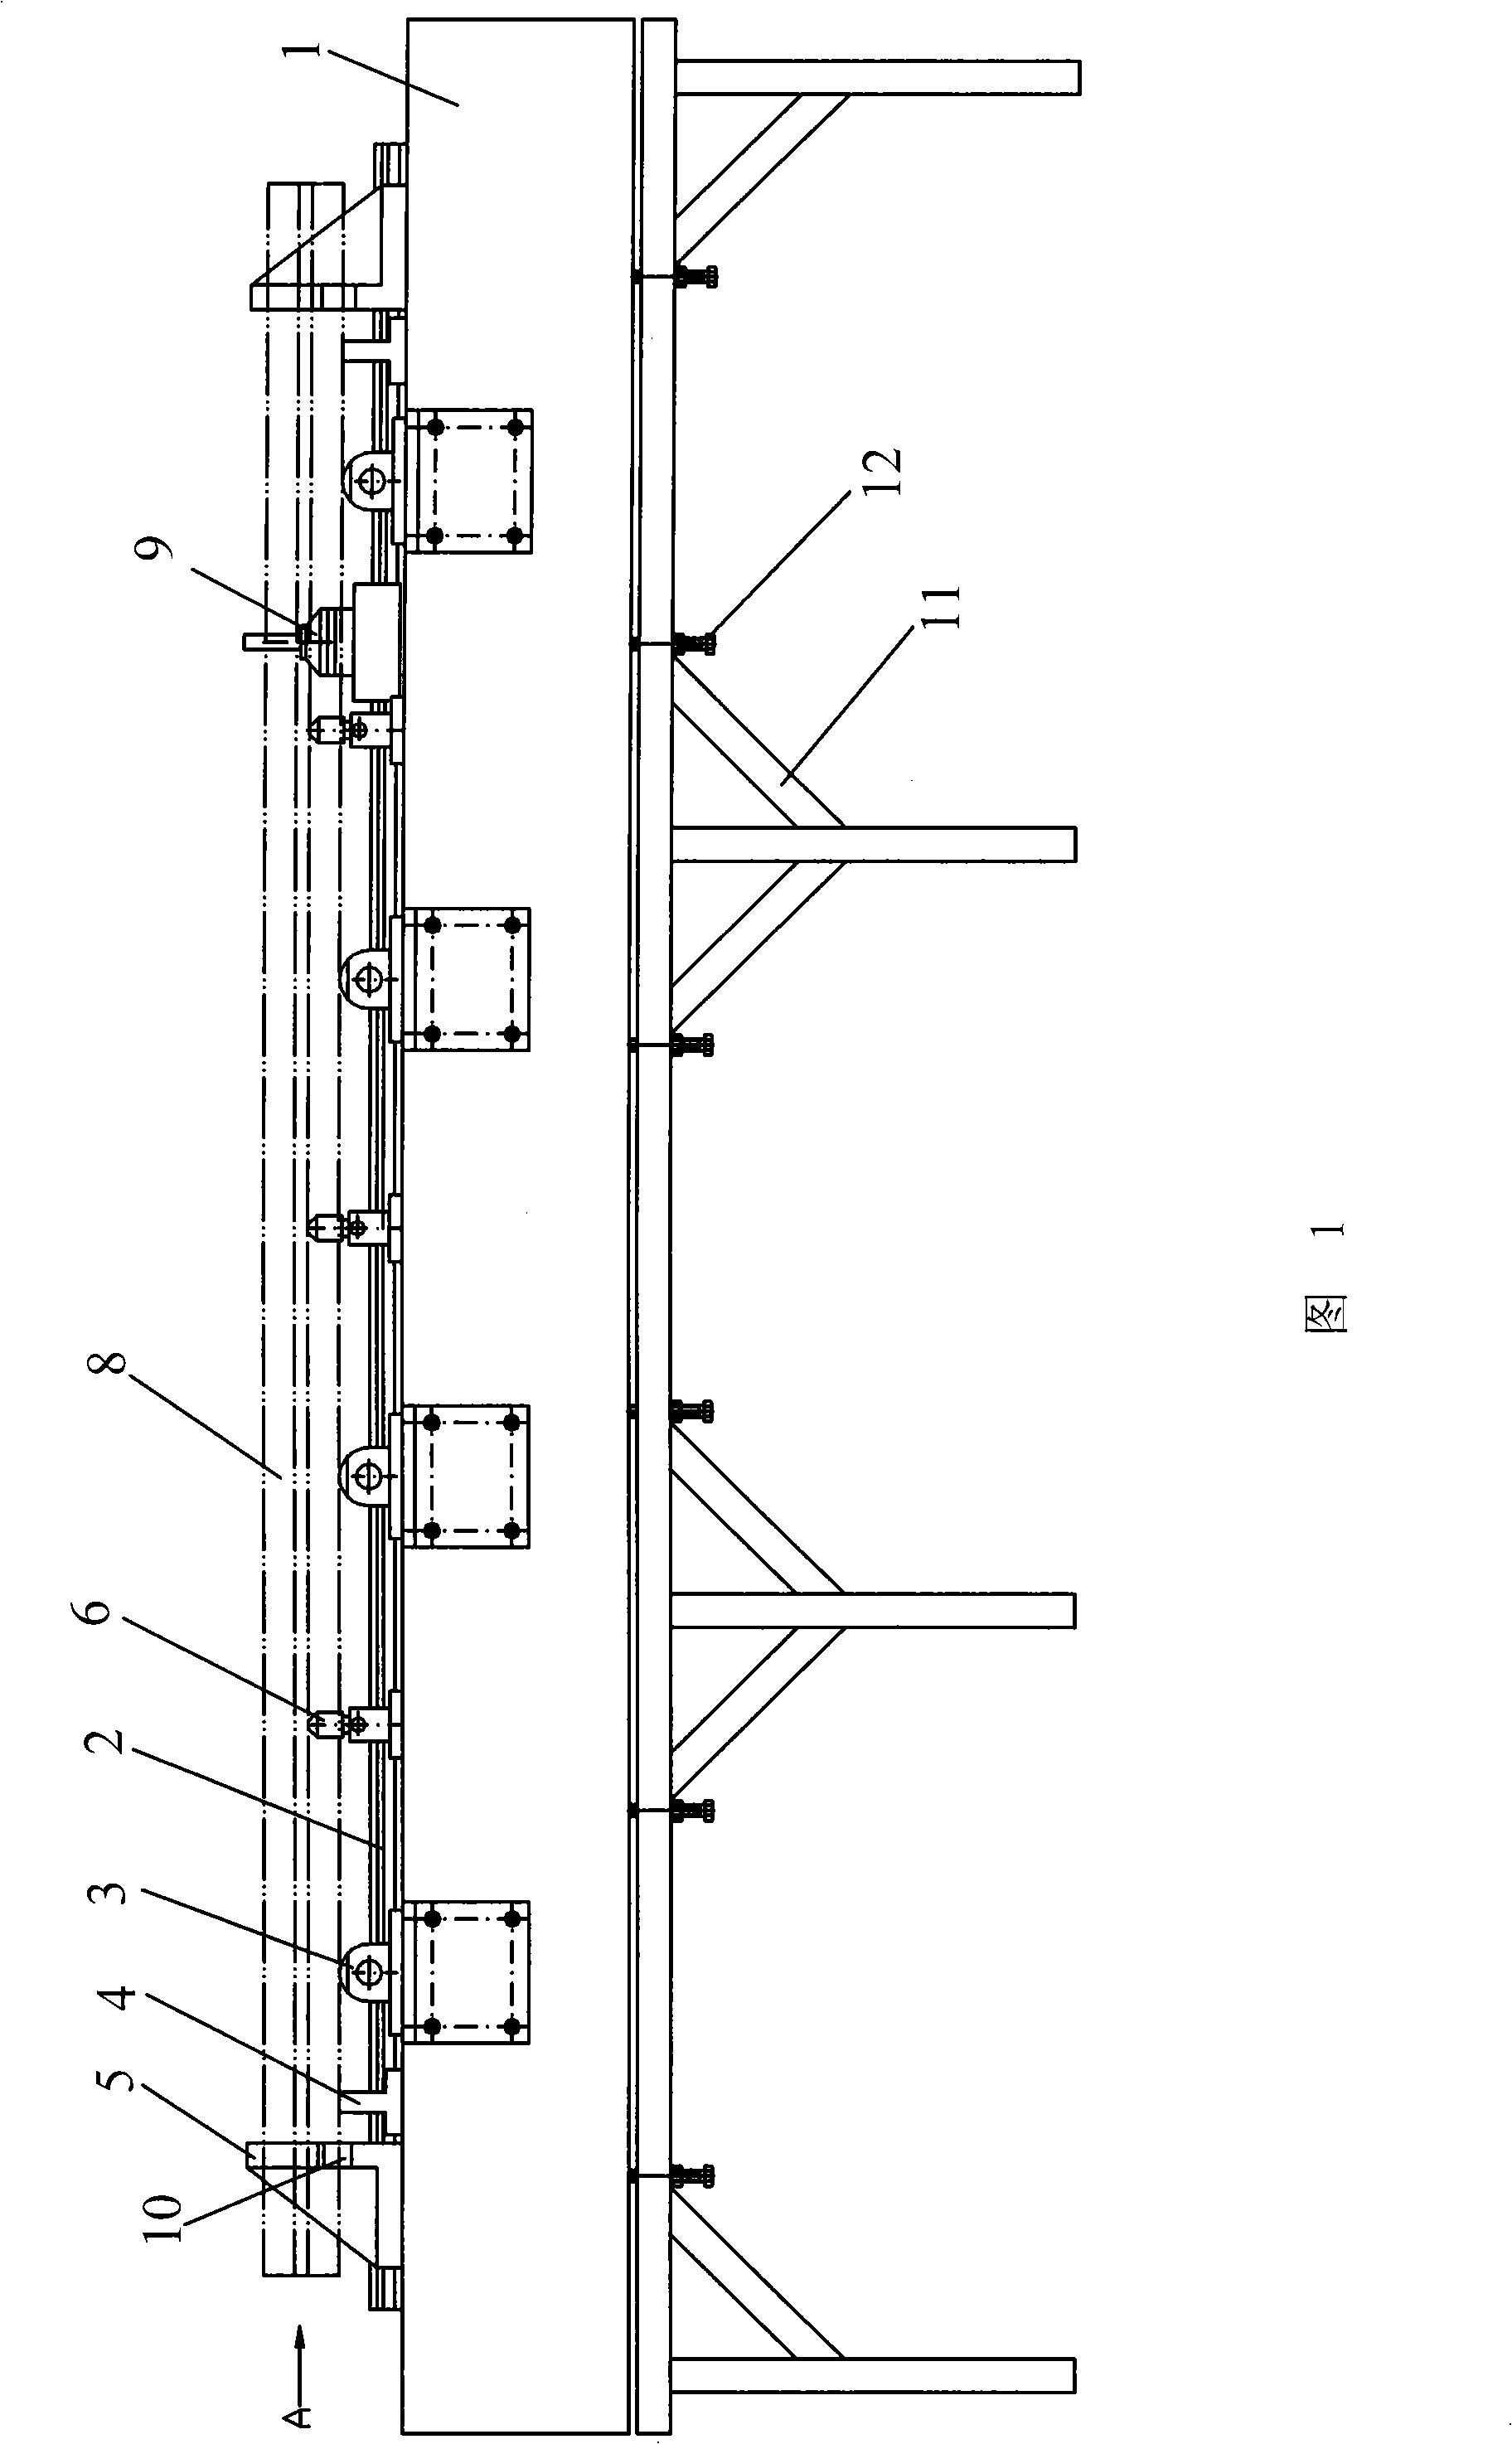 Slide rail linearity testing apparatus